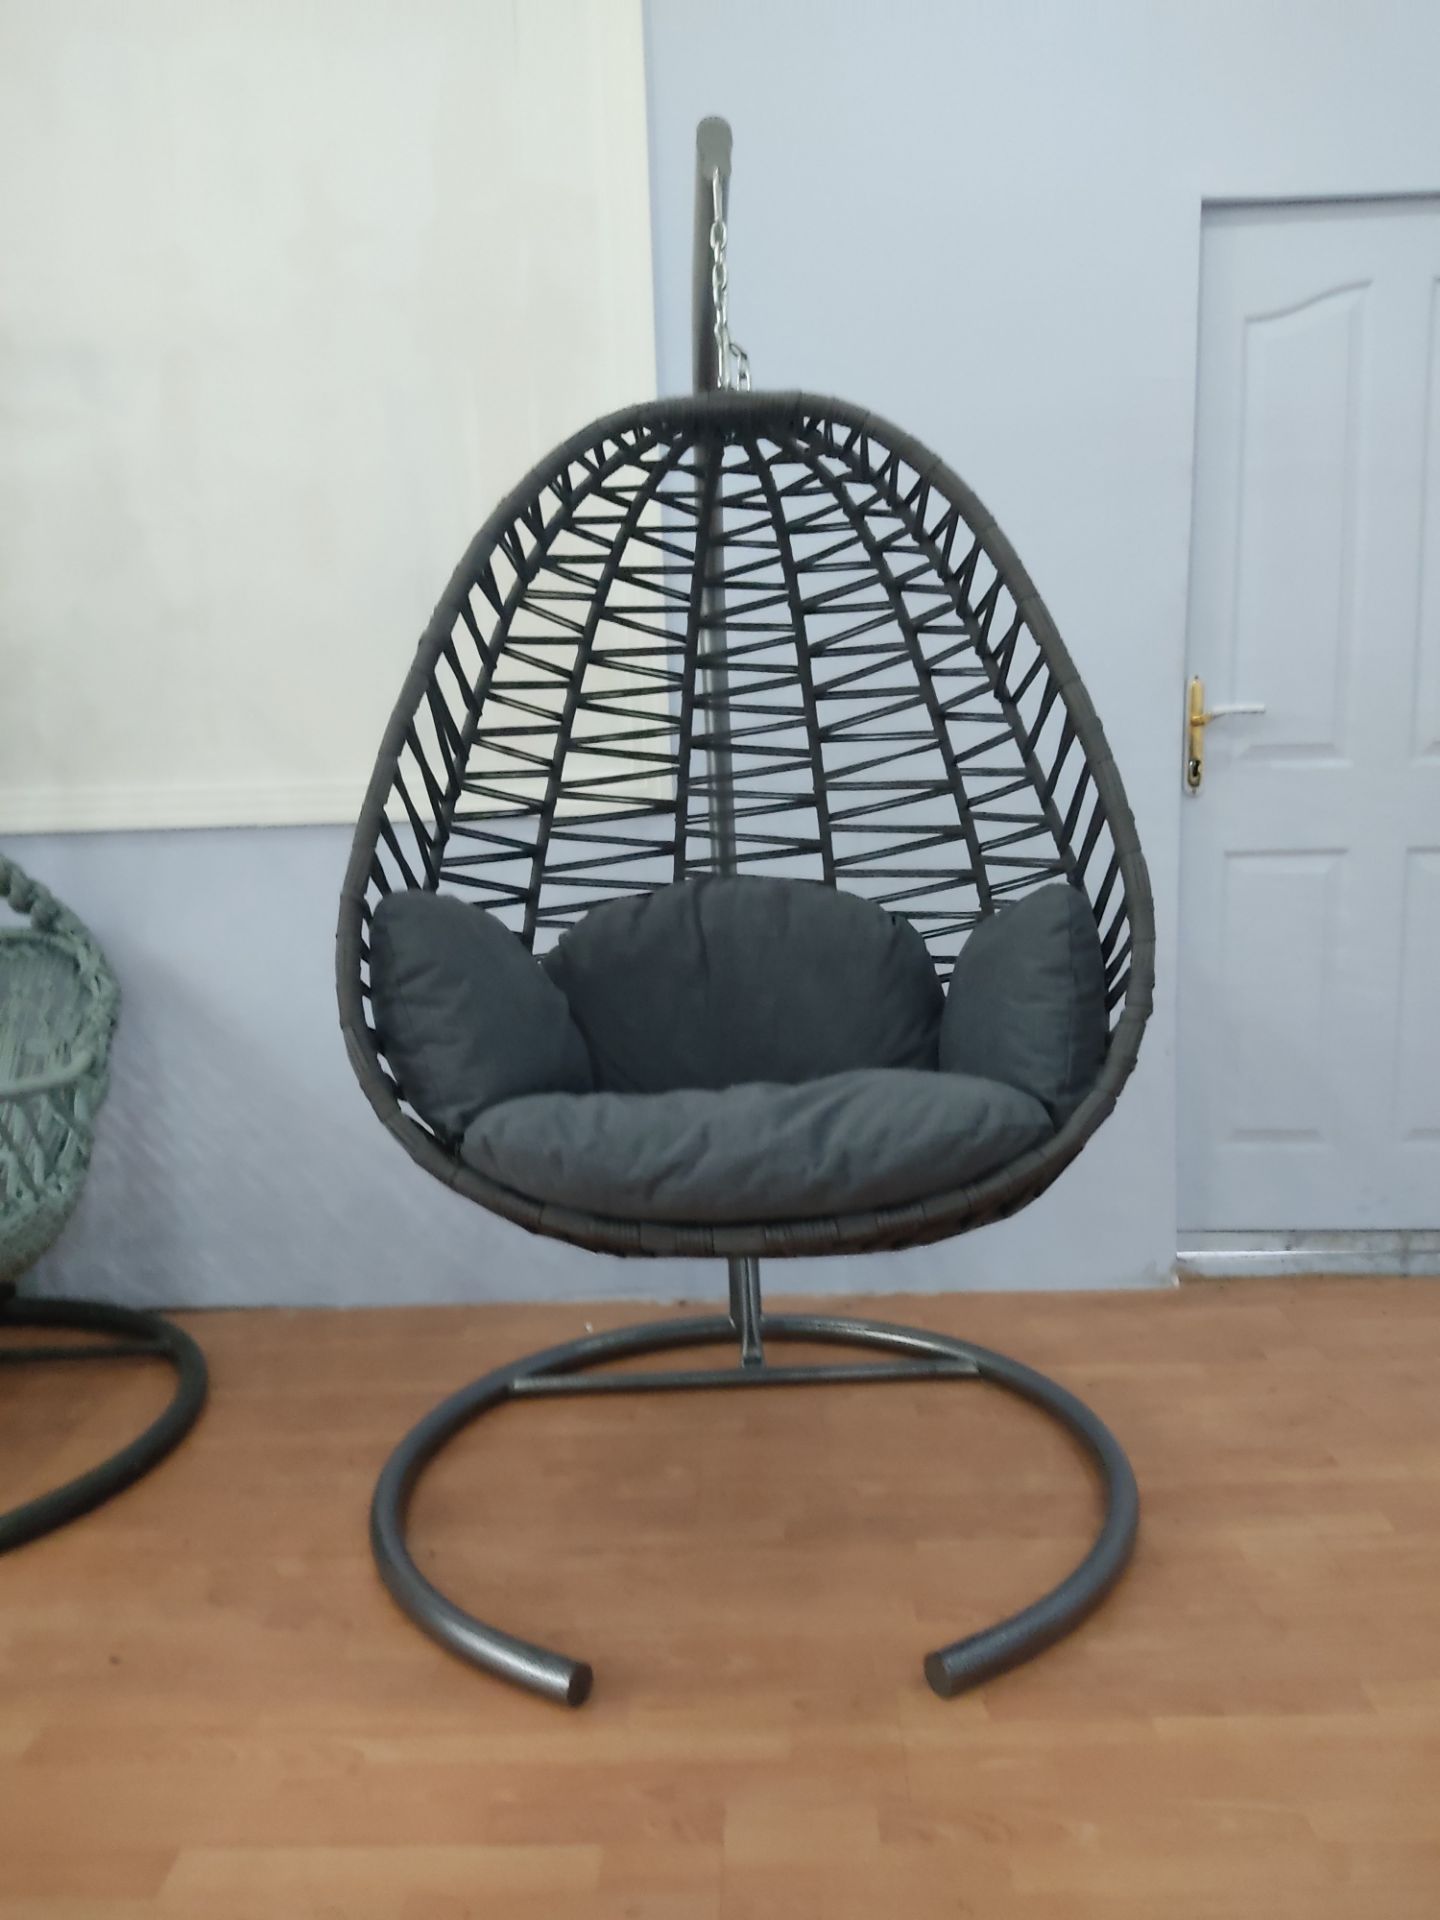 + VAT Brand New Chelsea Garden Company Adult Macrame Swing Hanging Chair - Dark Grey - Item Is